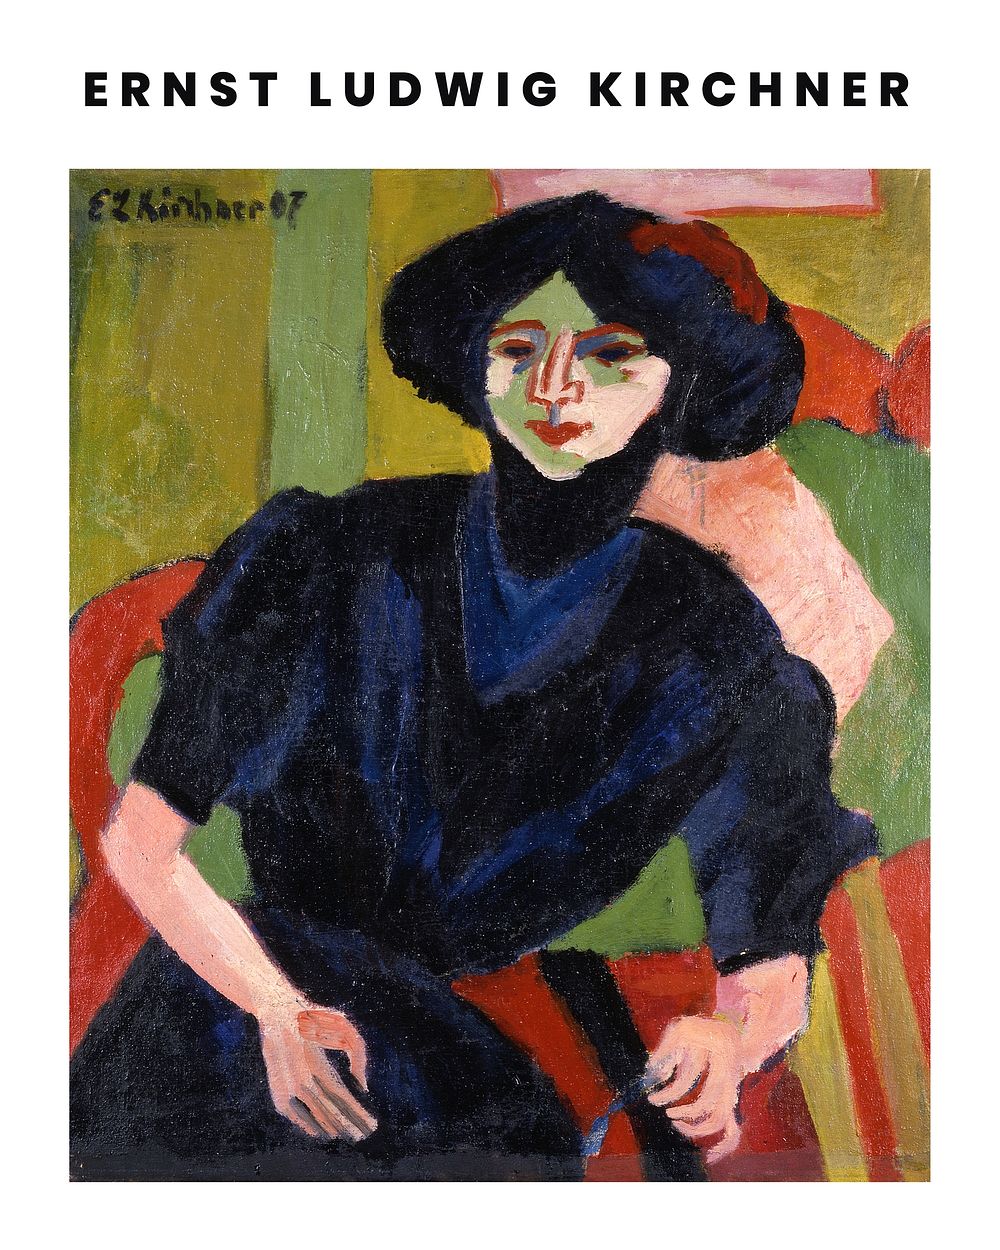 Ernst Ludwig Kirchner poster, vintage woman portrait painting